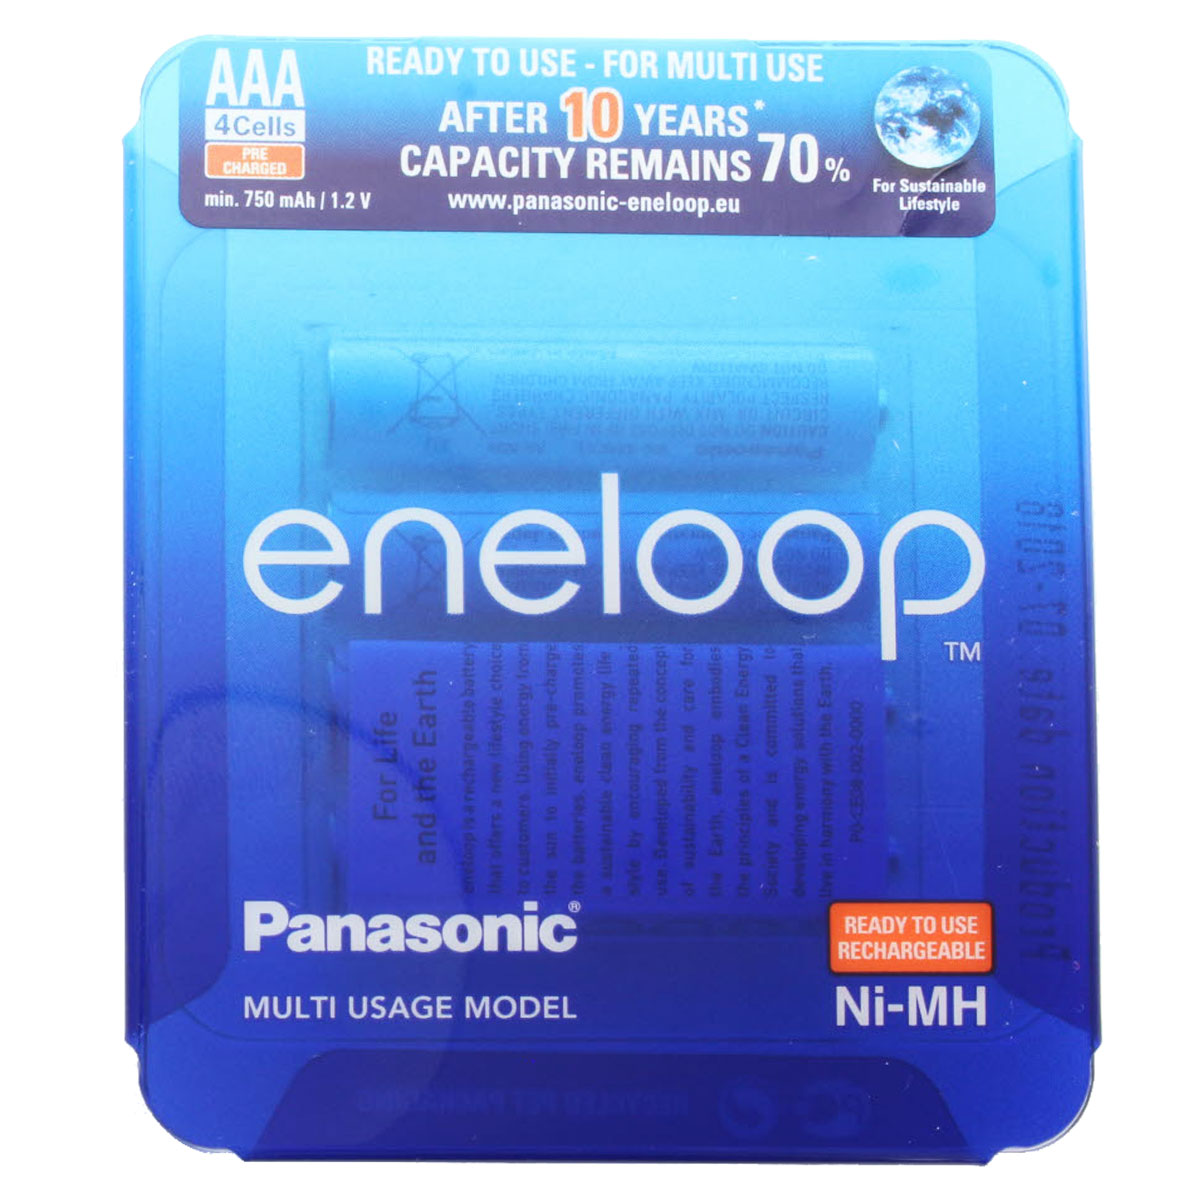 Panasonic eneloop Standard (ehem. Sanyo eneloop Standard) Akku AAA HR-4UTGA 800mAh 4er + AccuCell Box AAA